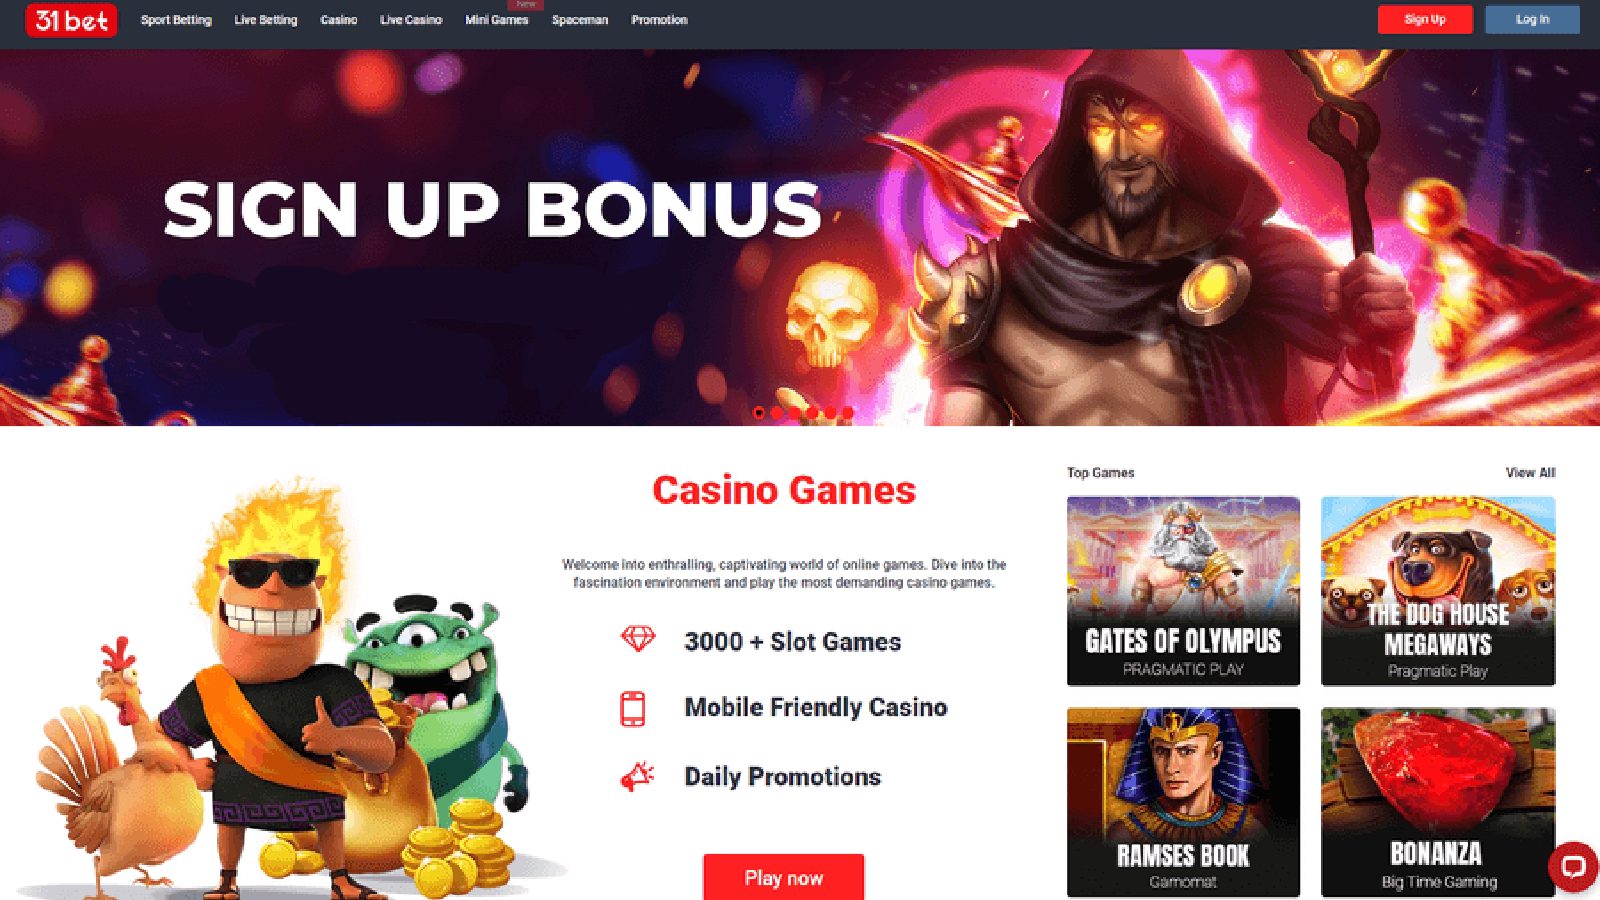 31Bet Casino Review - Games, Bonuses & More